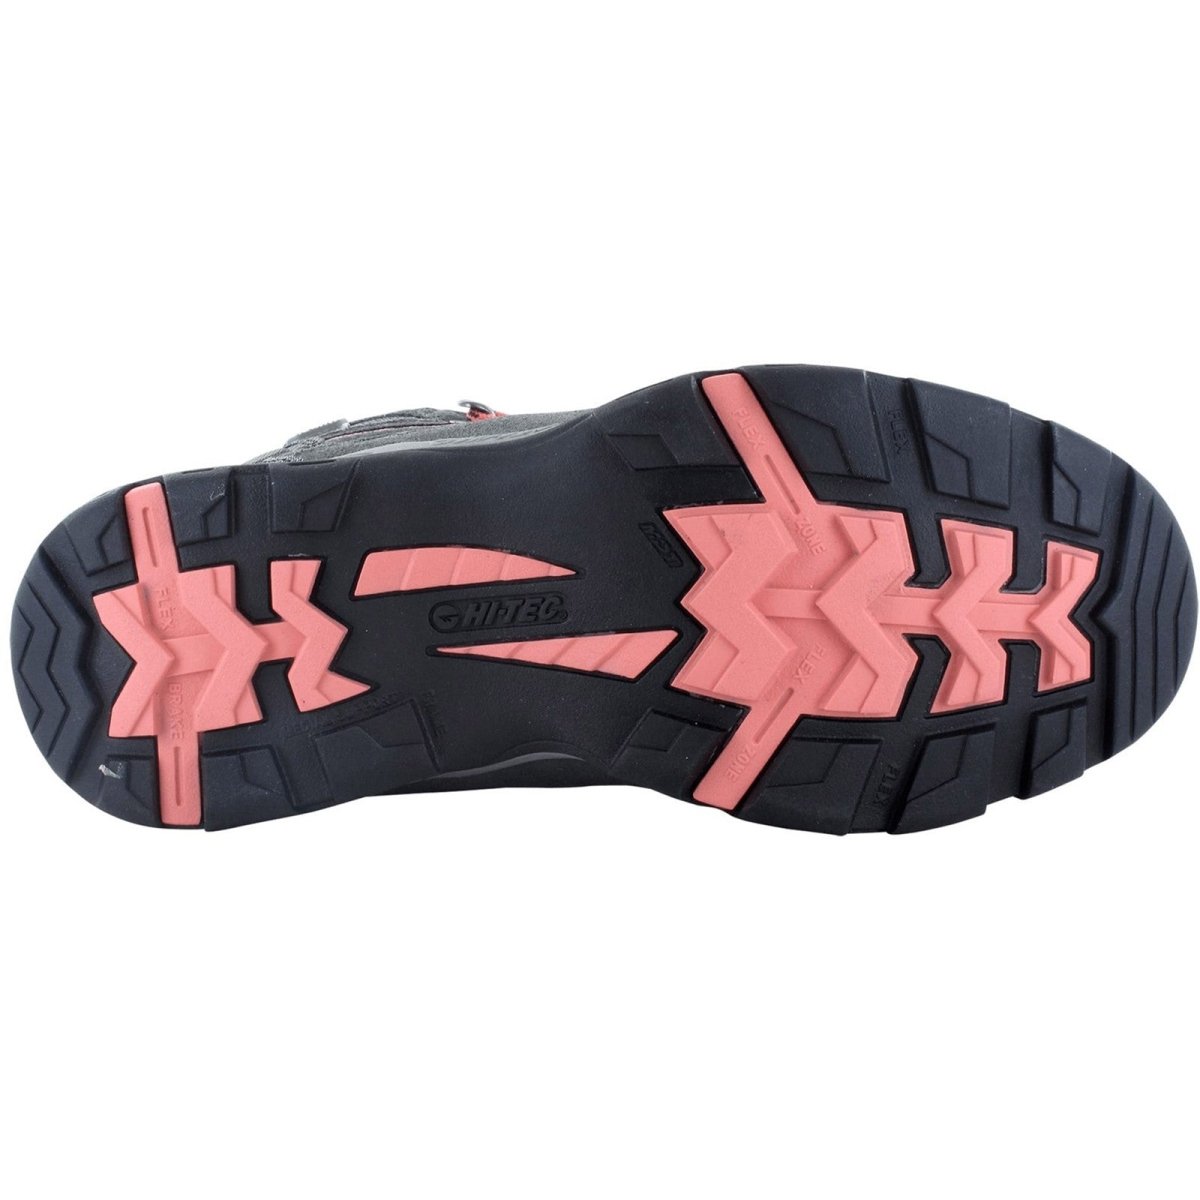 Hi-Tec Bandera II Ladies Waterproof Lightweight Hiking Boots - Shoe Store Direct